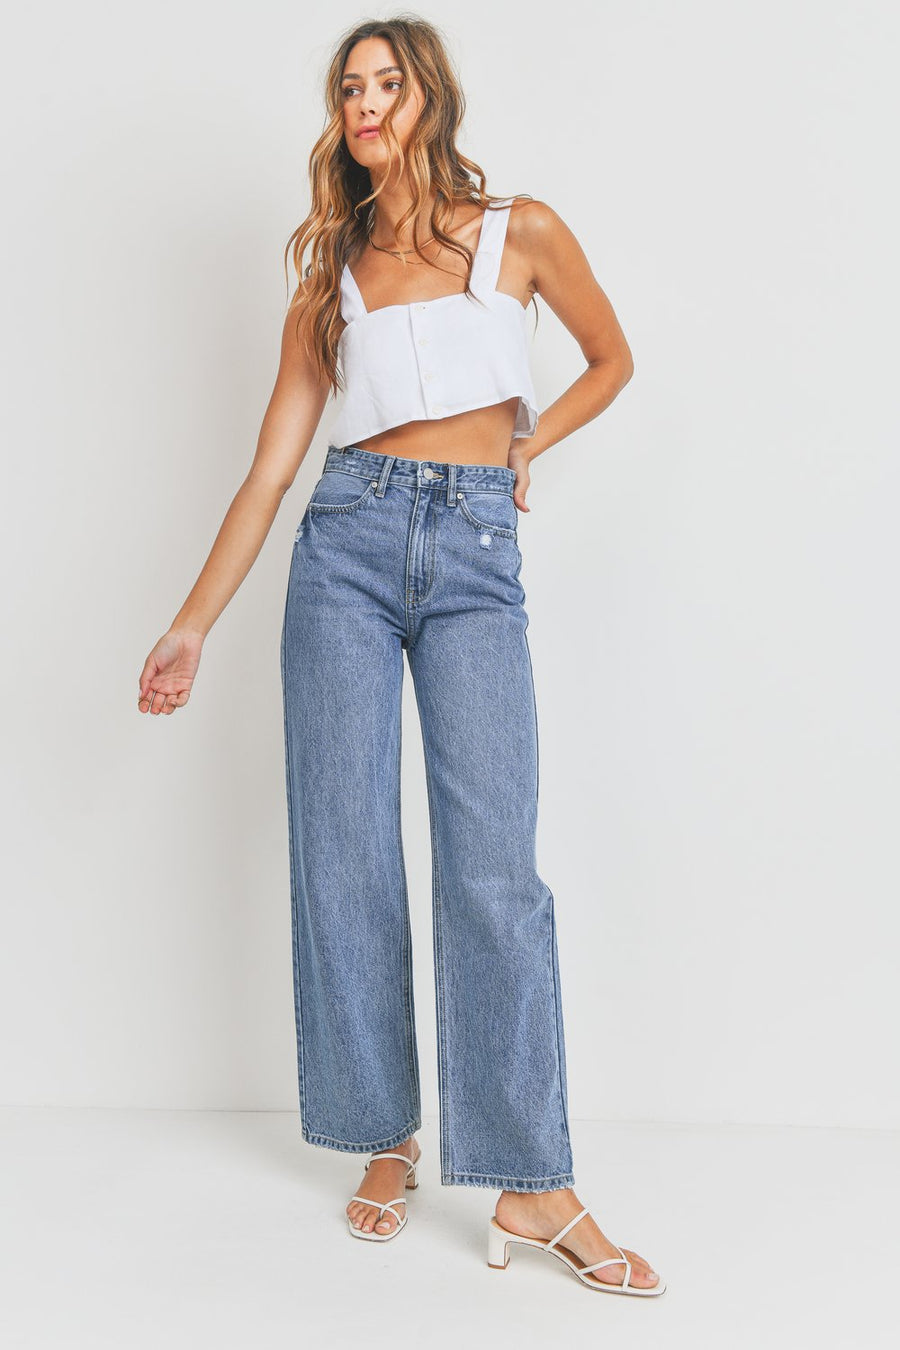 Model is wearing full length medium wash wide leg jeans.